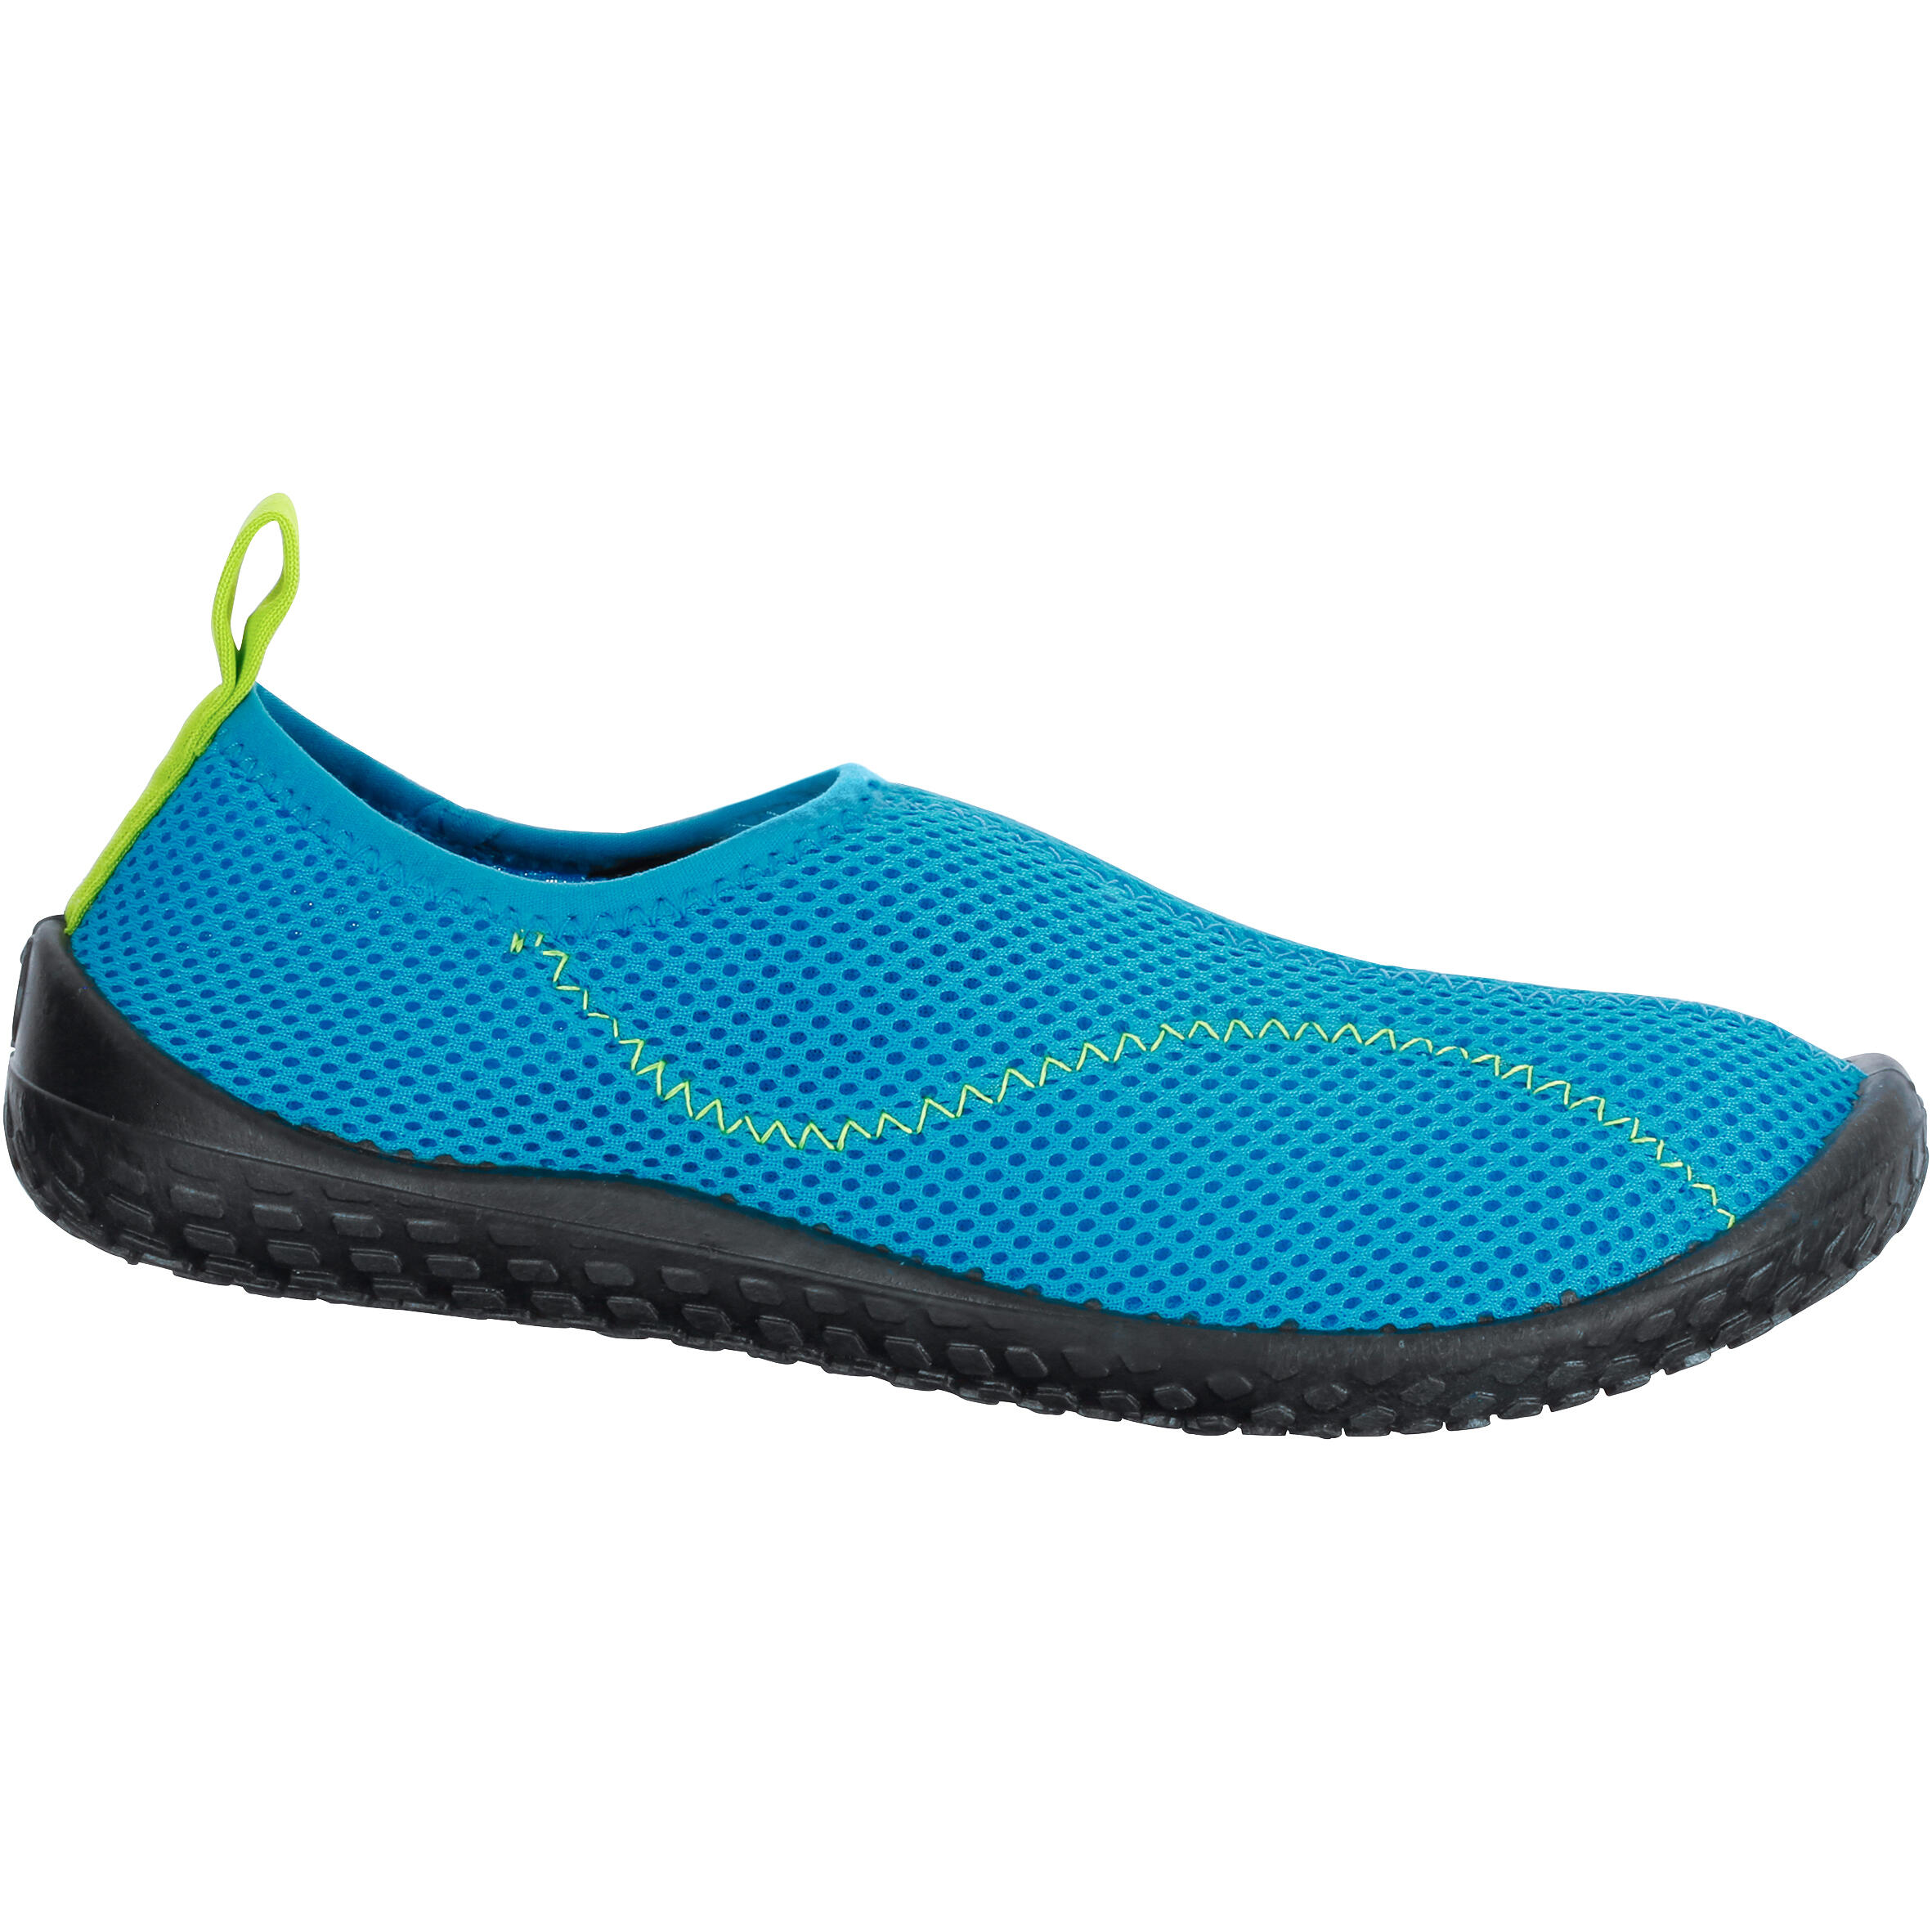 Aquashoes, water shoes